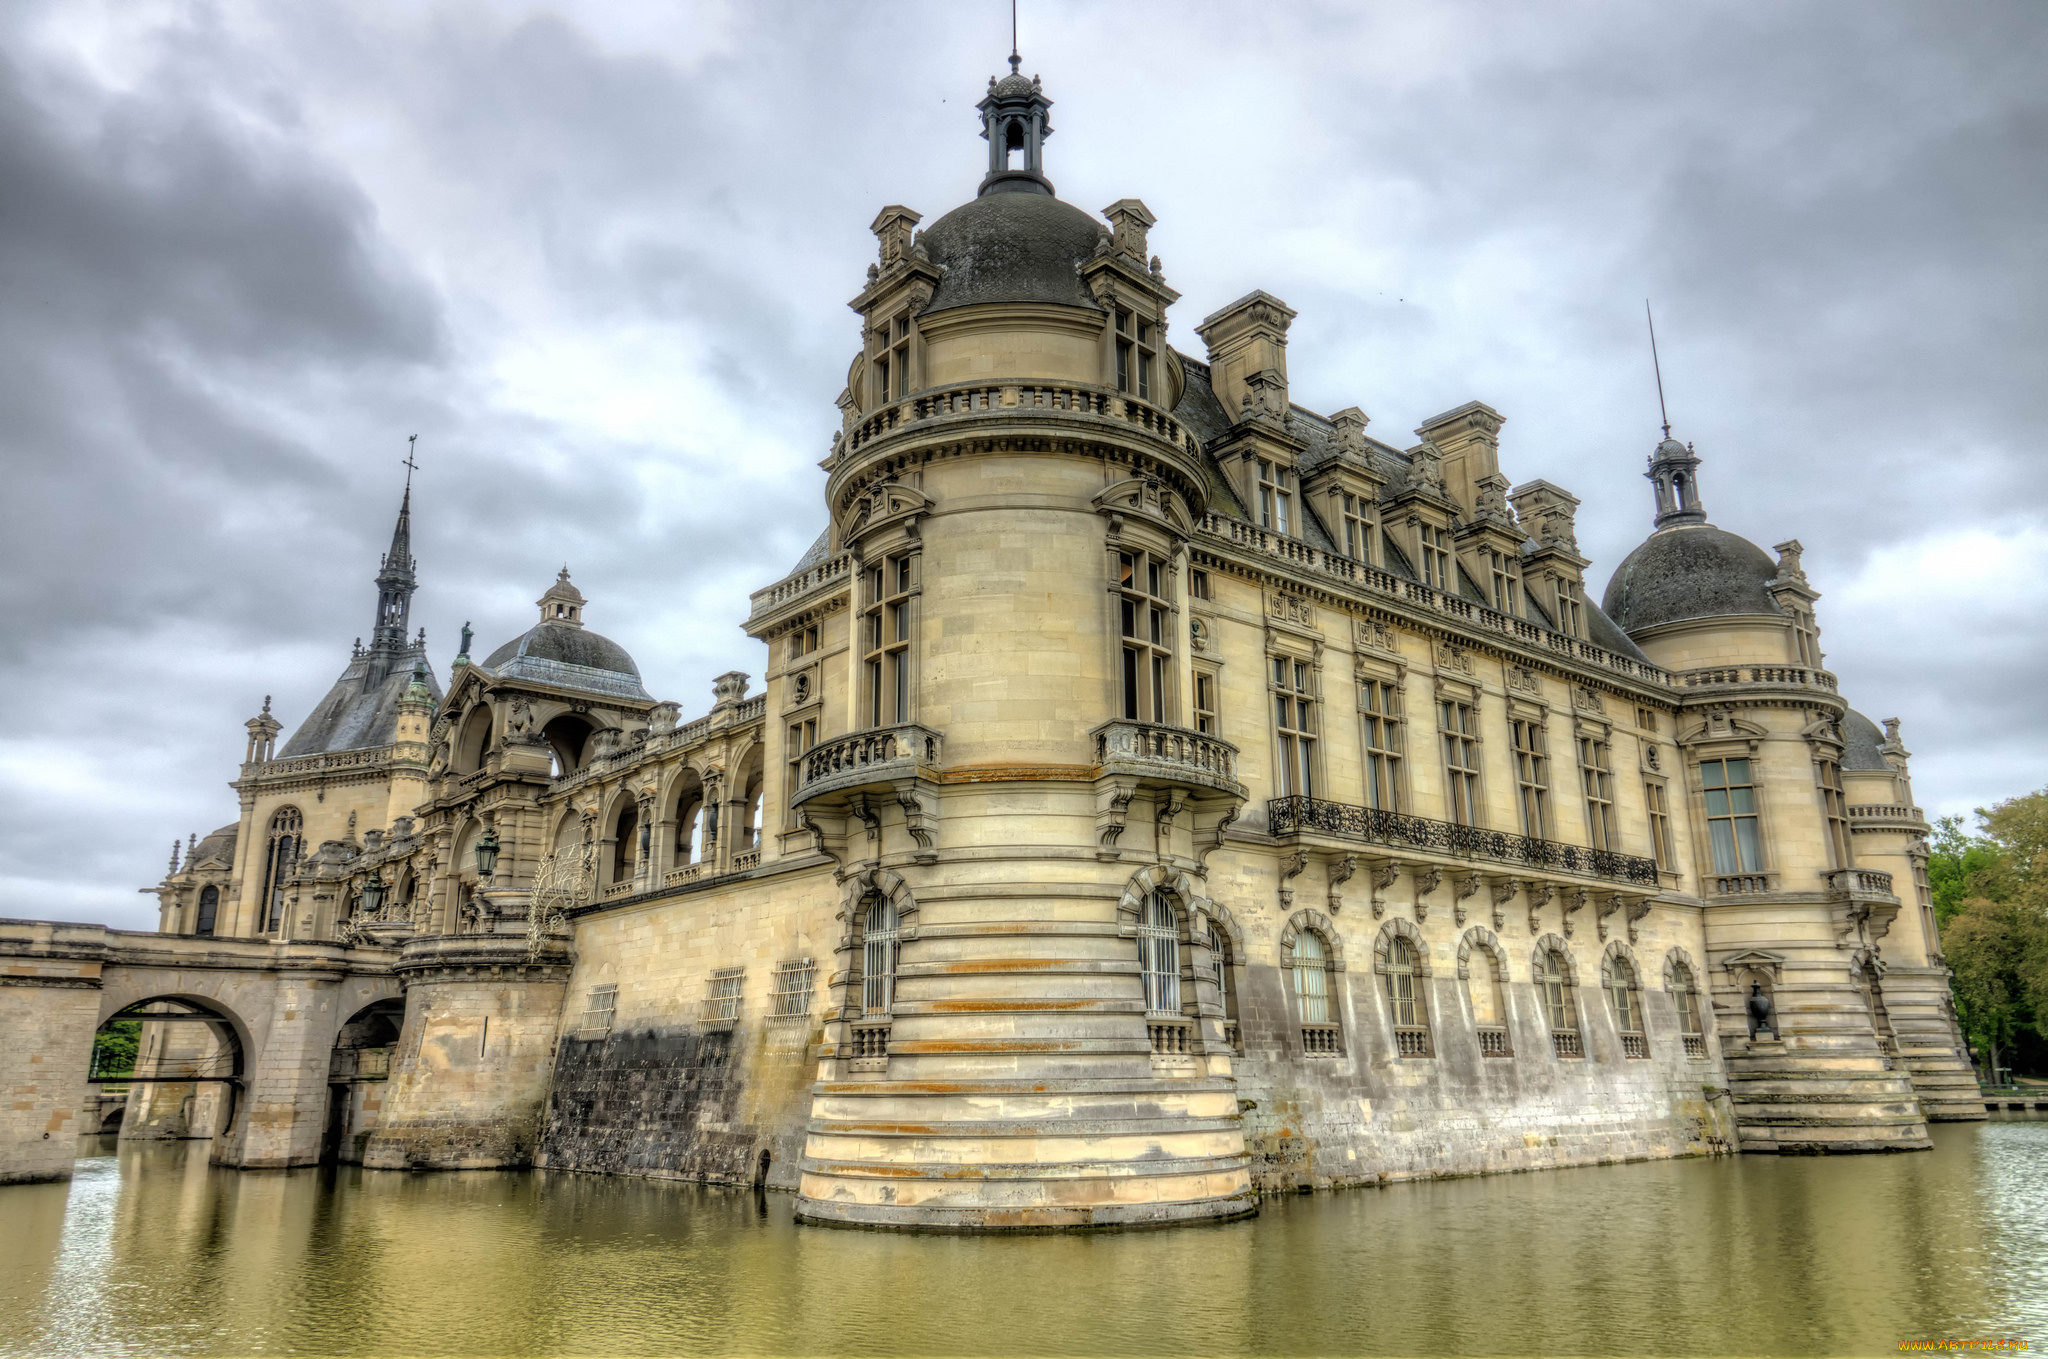 архитектура замок озеро лебеди Шато де Шантильи Франция загрузить